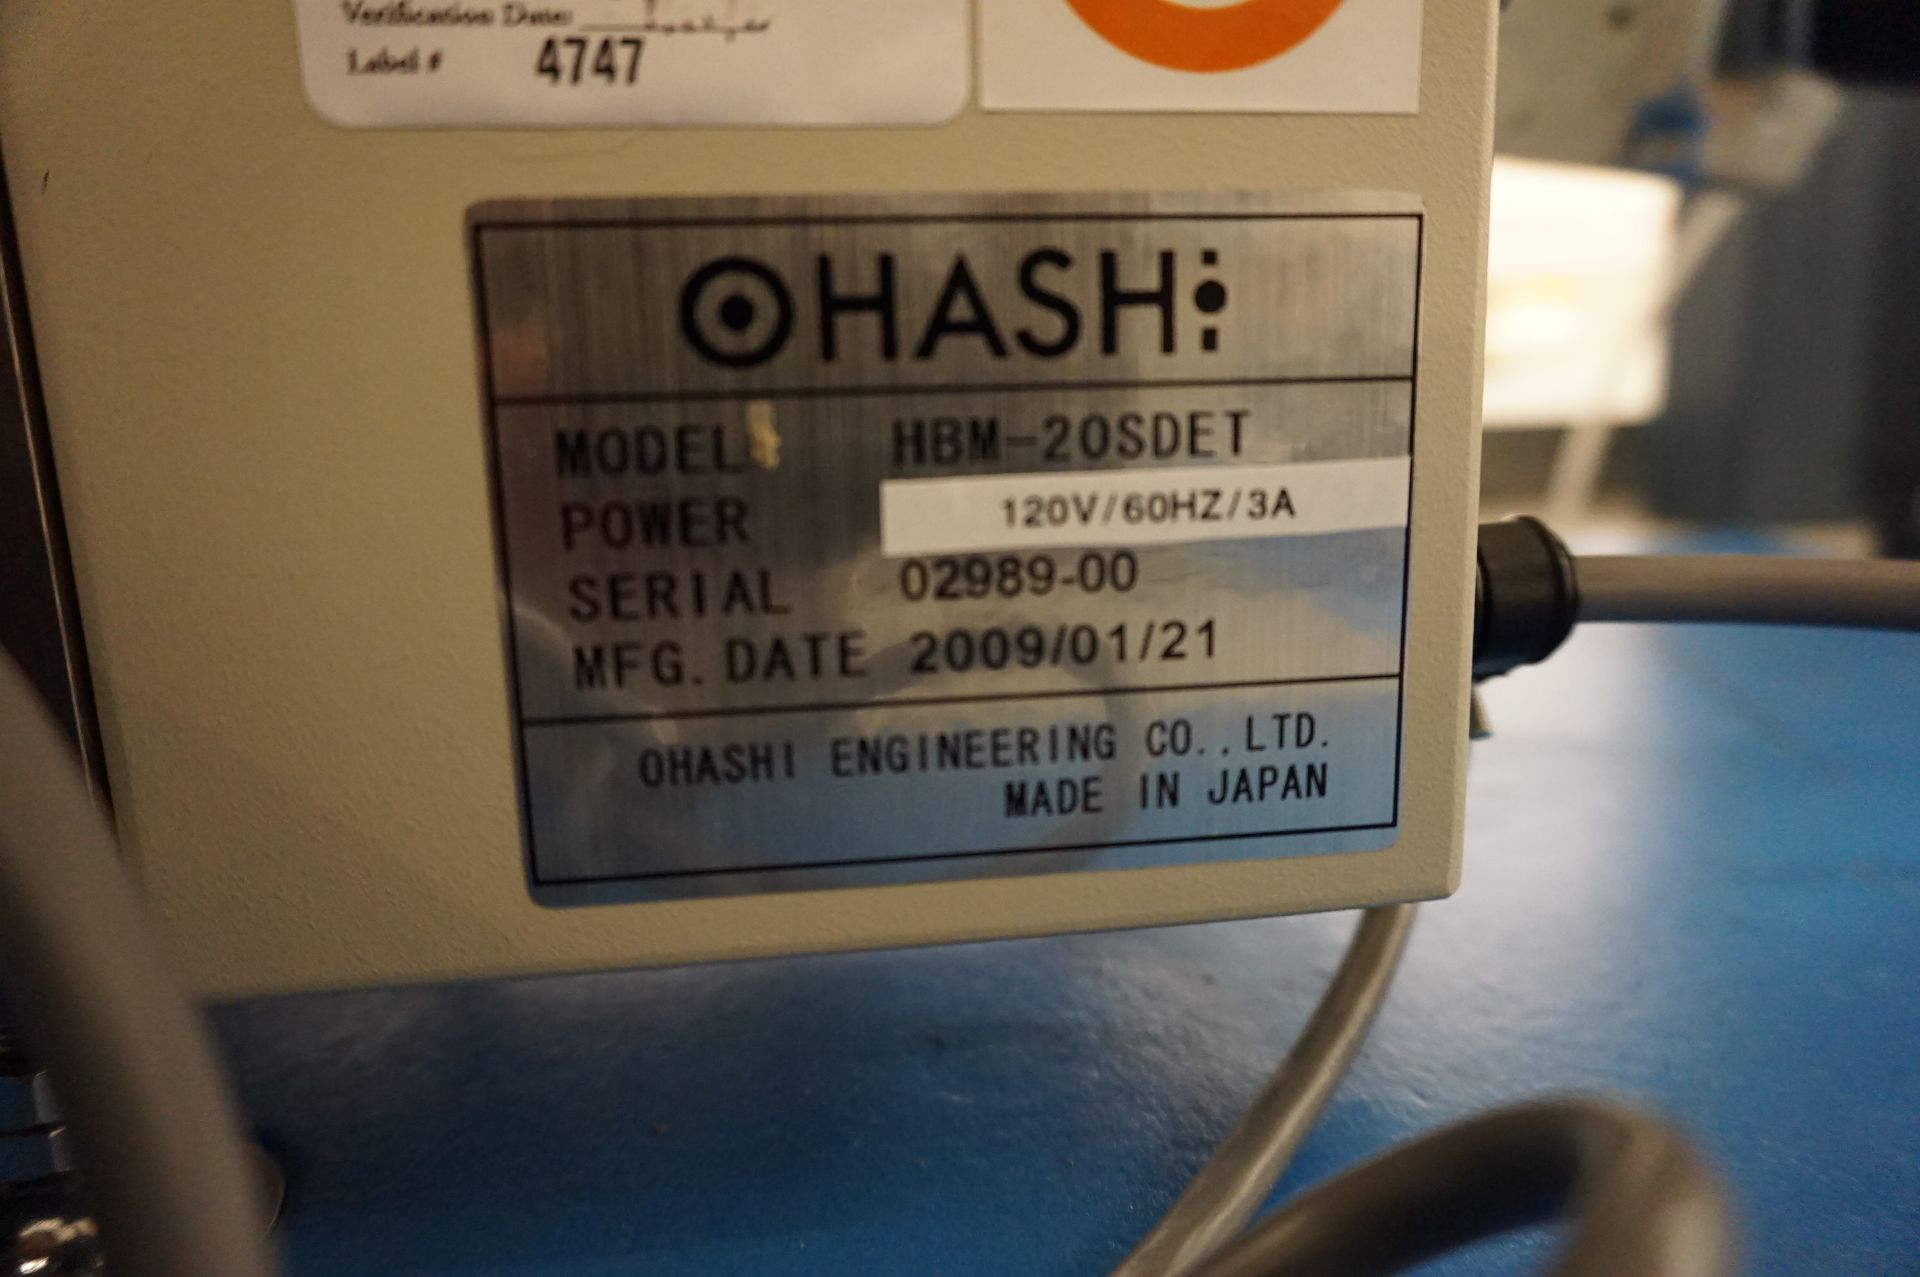 2009 OHASHI CABLE BONDER, MODEL HBM-20SDET, S/N 02989-00, 120 V, 60HZ, 3 A - Image 5 of 5